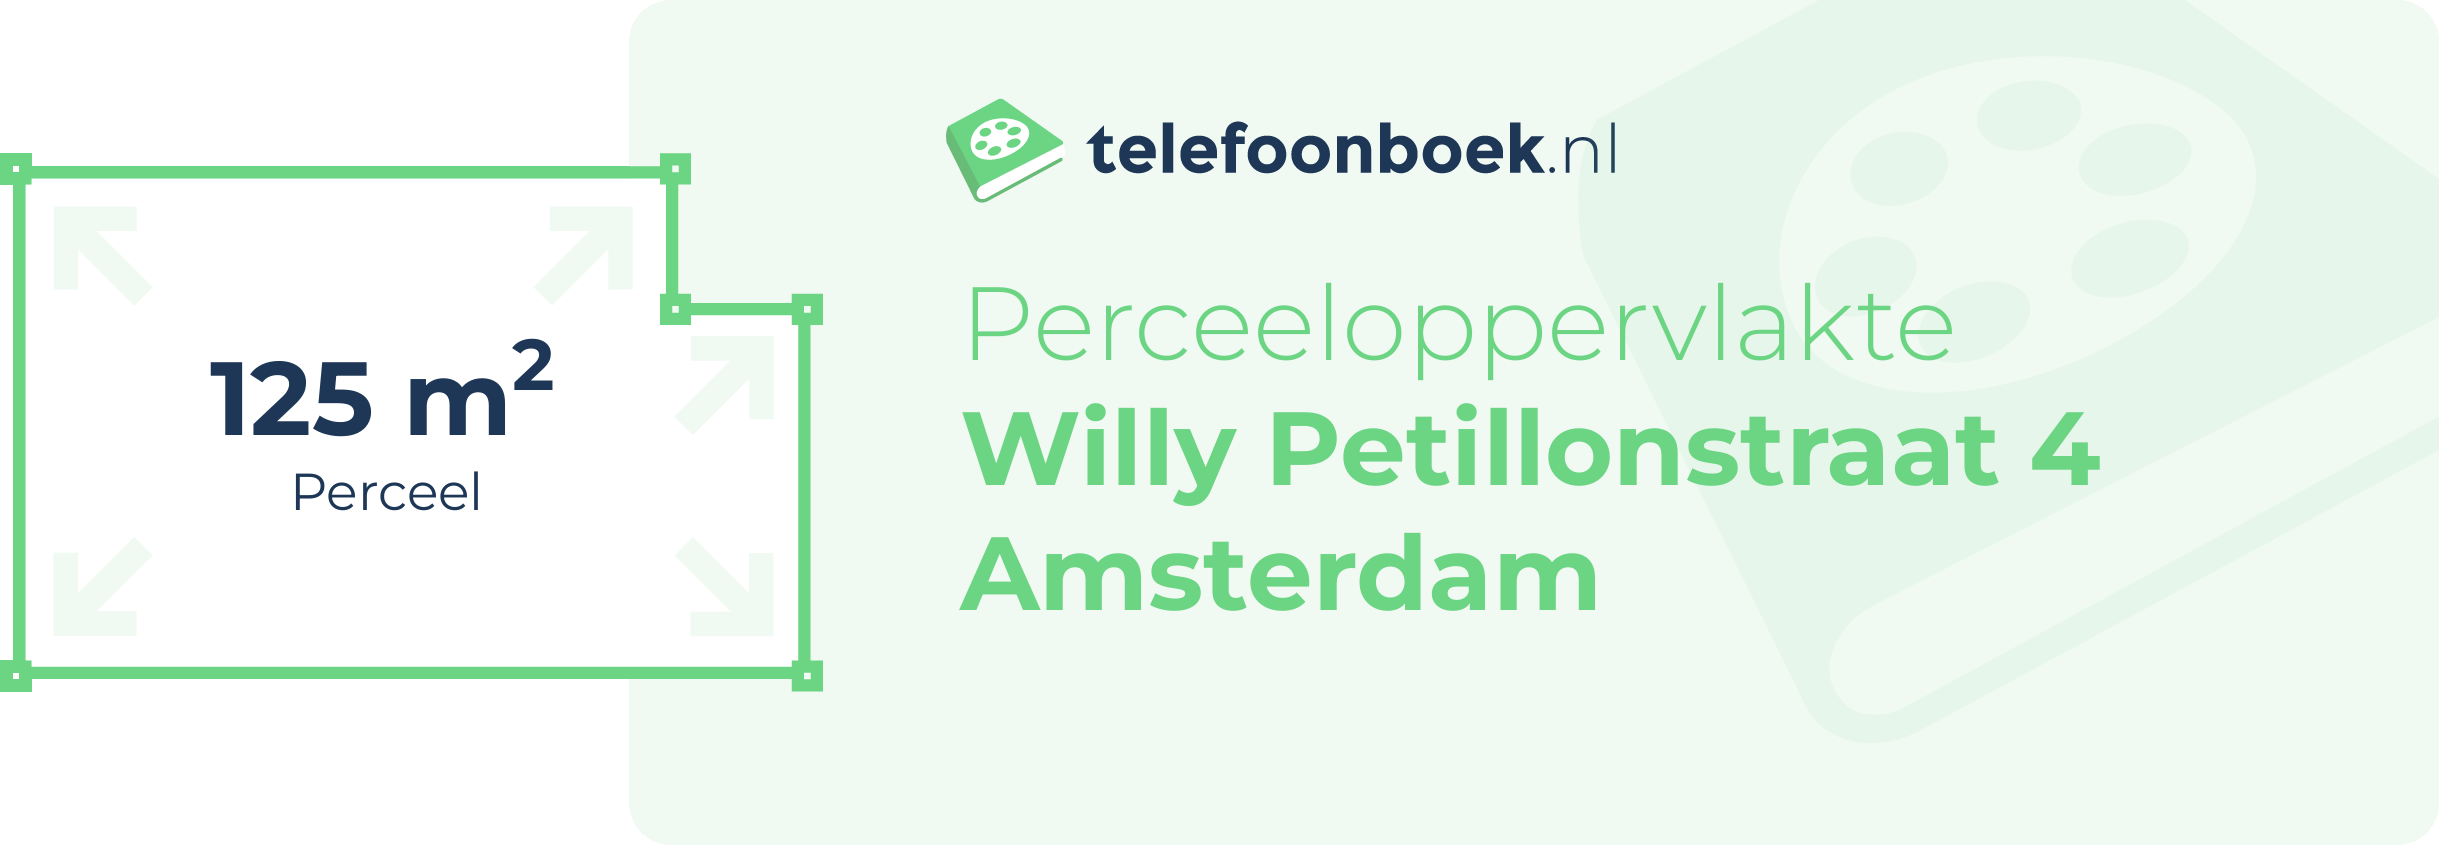 Perceeloppervlakte Willy Petillonstraat 4 Amsterdam